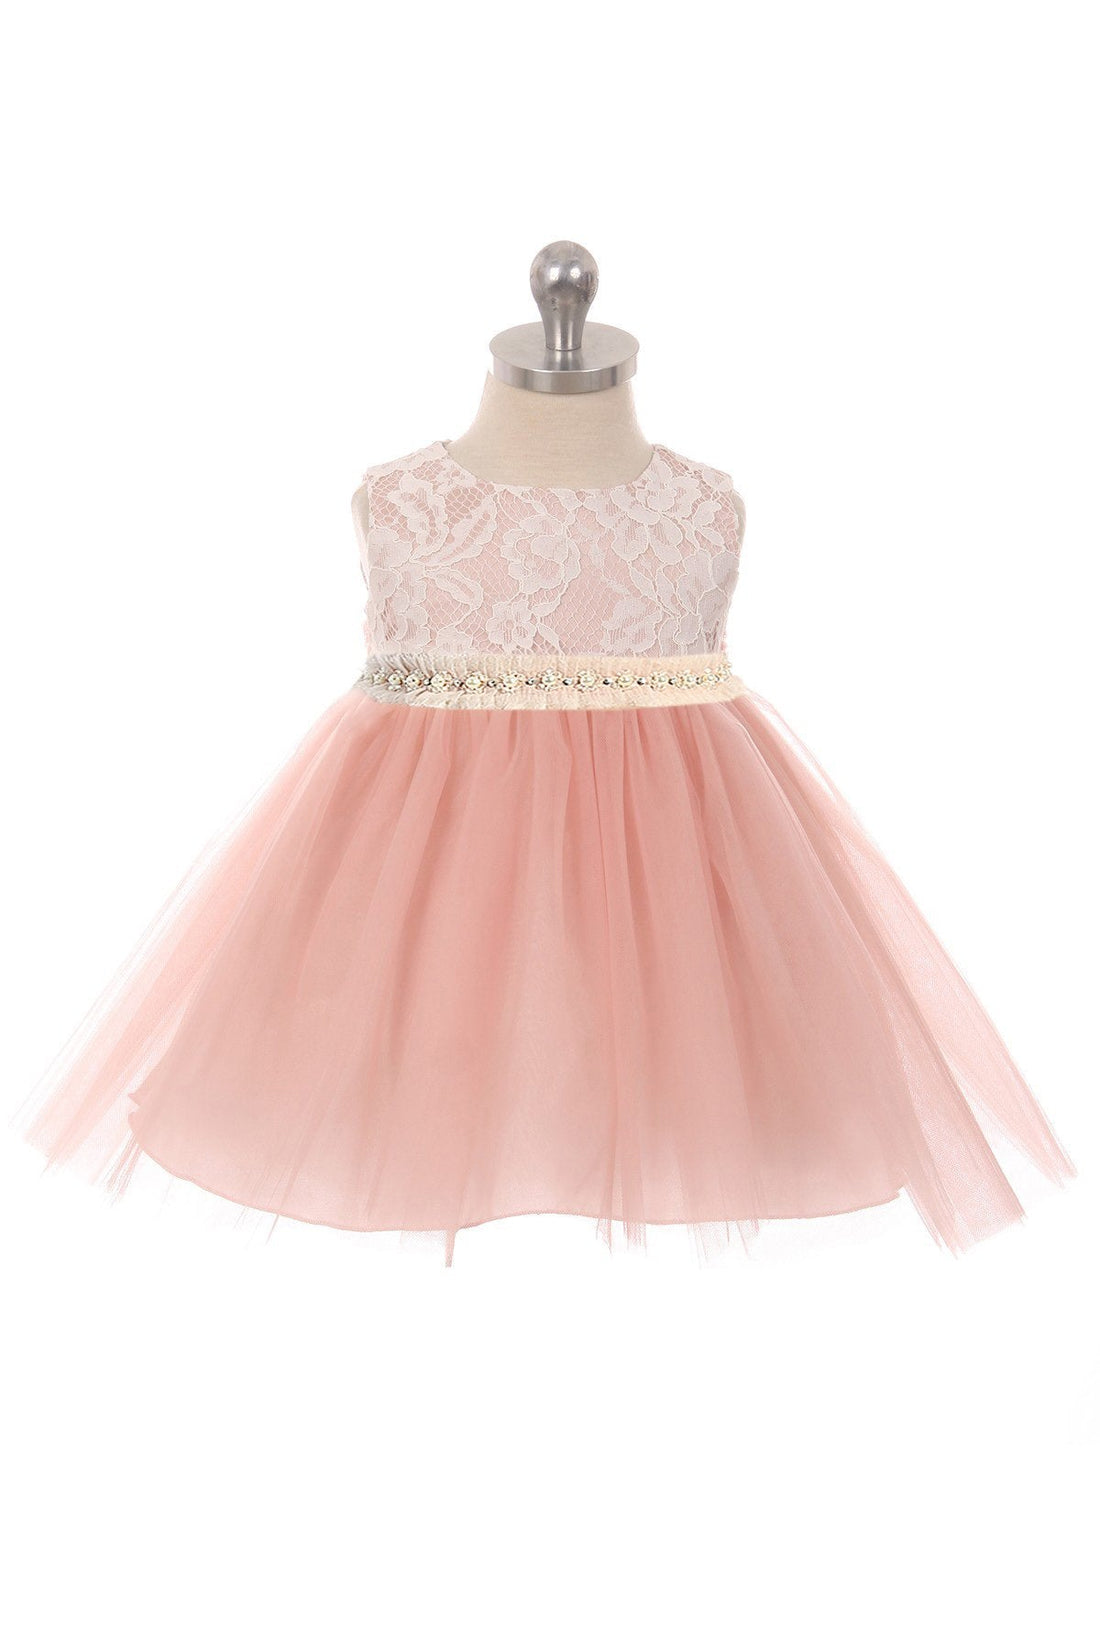 Baby Girl Lace & Mesh Pearl Trim Party Dress - AS456B-B Kids Dream